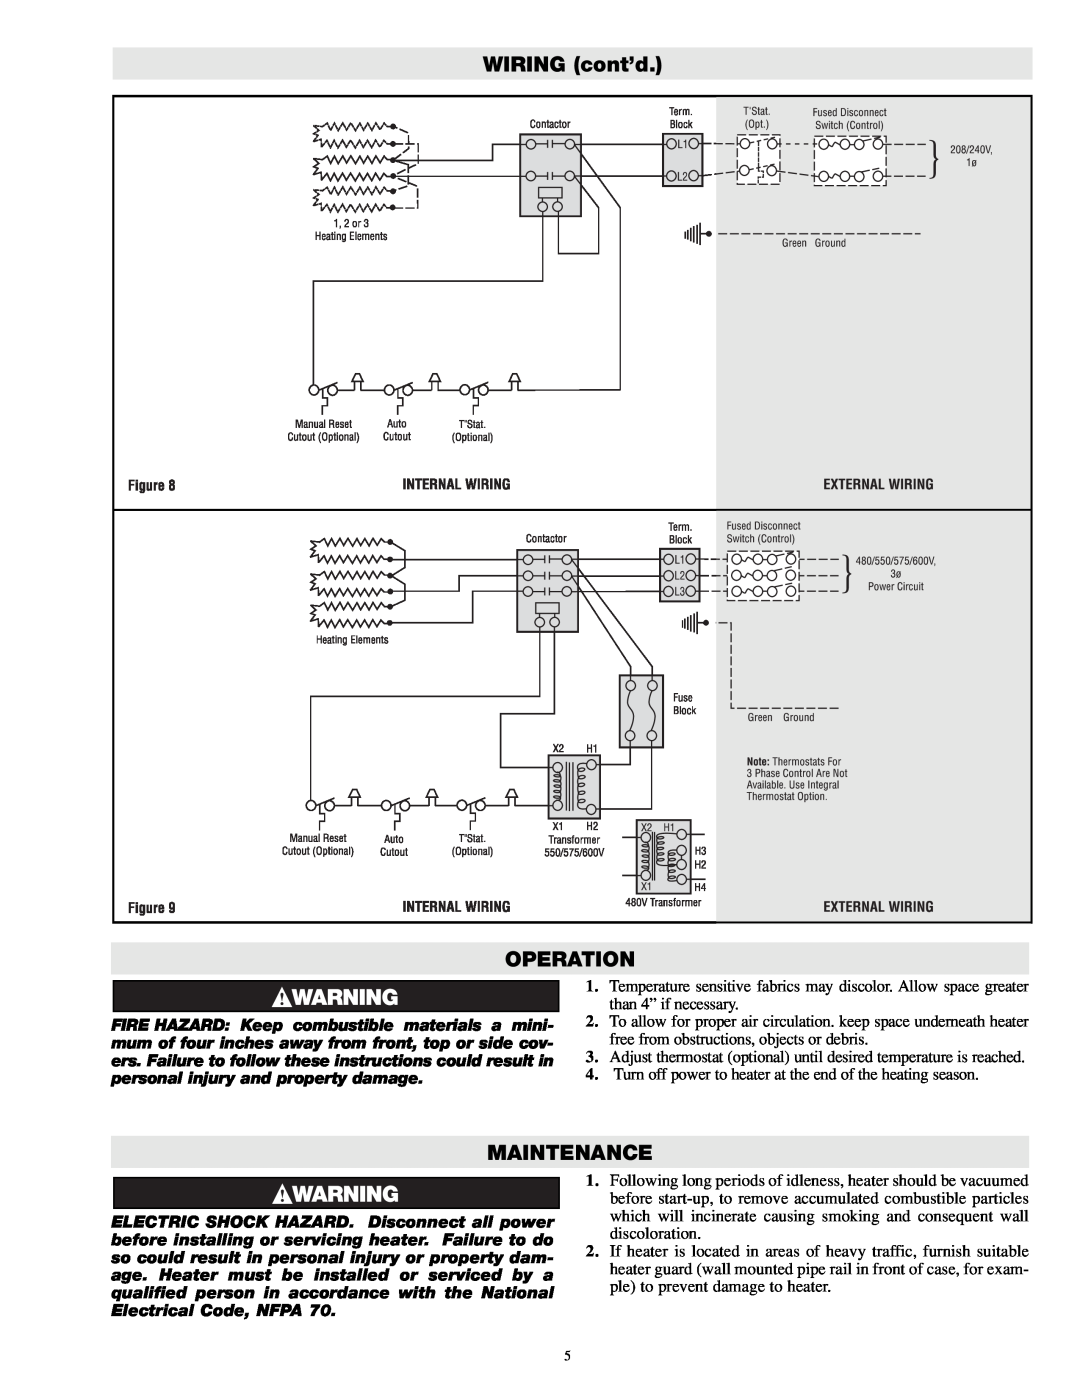 Chromalox PF422-5 manual WIRING cont’d OPERATION, Maintenance 